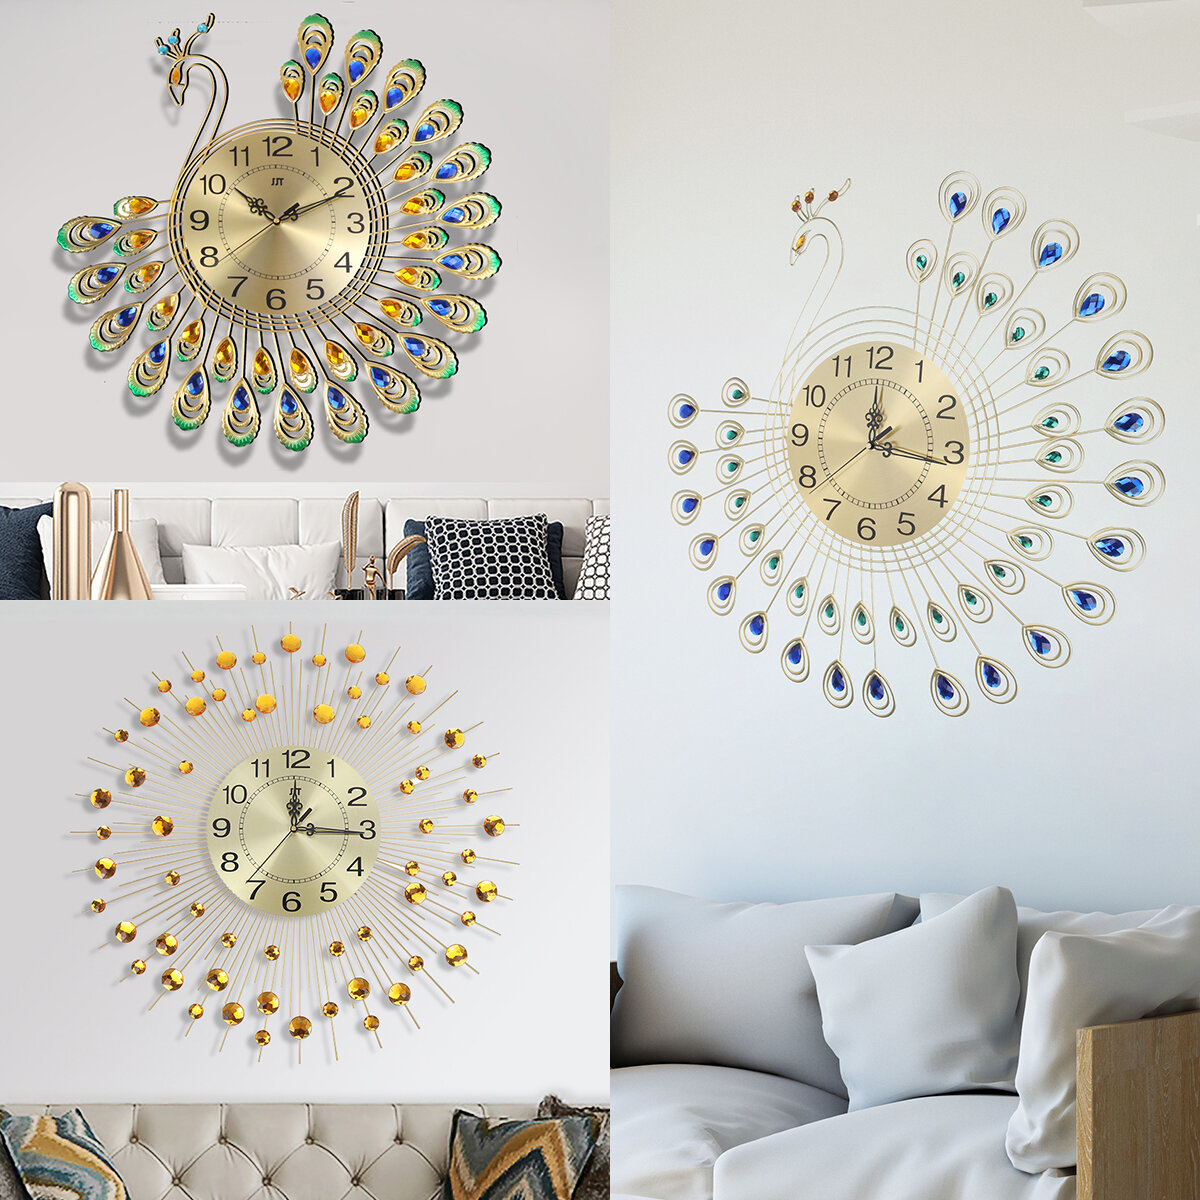 3D Wall ClockLarge Luxury DIY Flower Peacock Diamond Wall Clock Metal Modern Home Decor